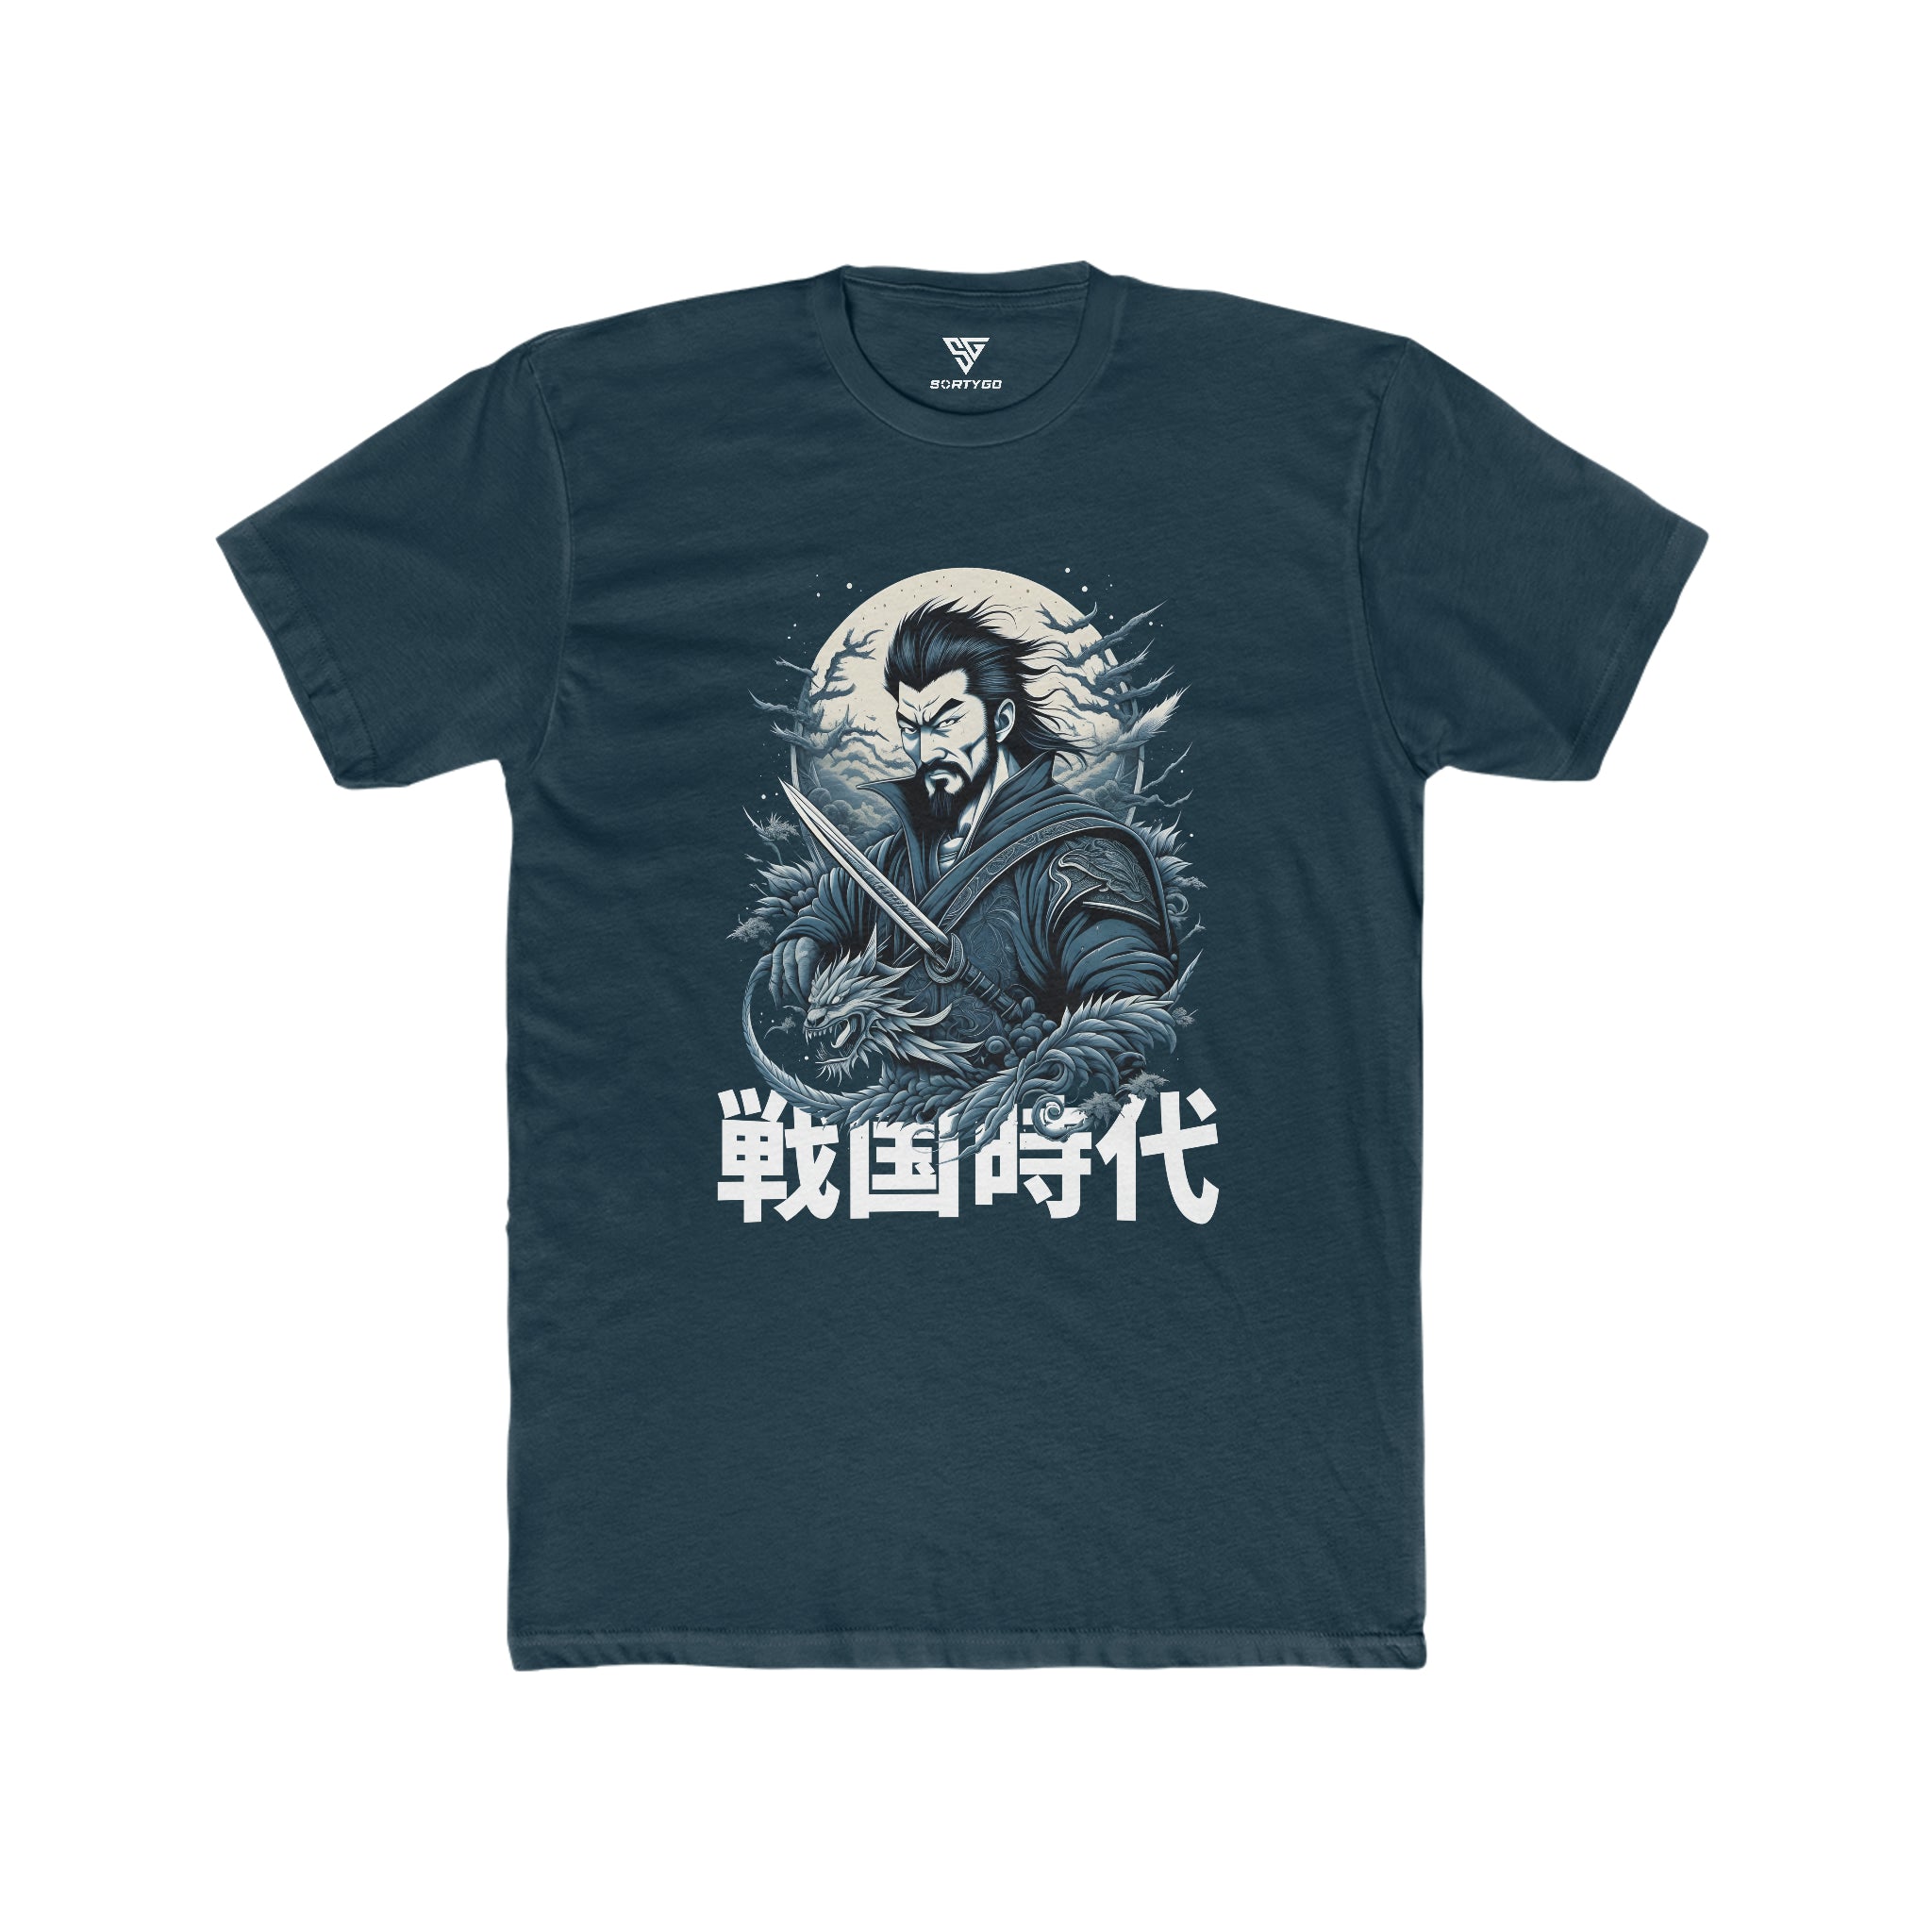 SORTYGO - Japanese Warrior Men Fitted T-Shirt in Solid Midnight Navy